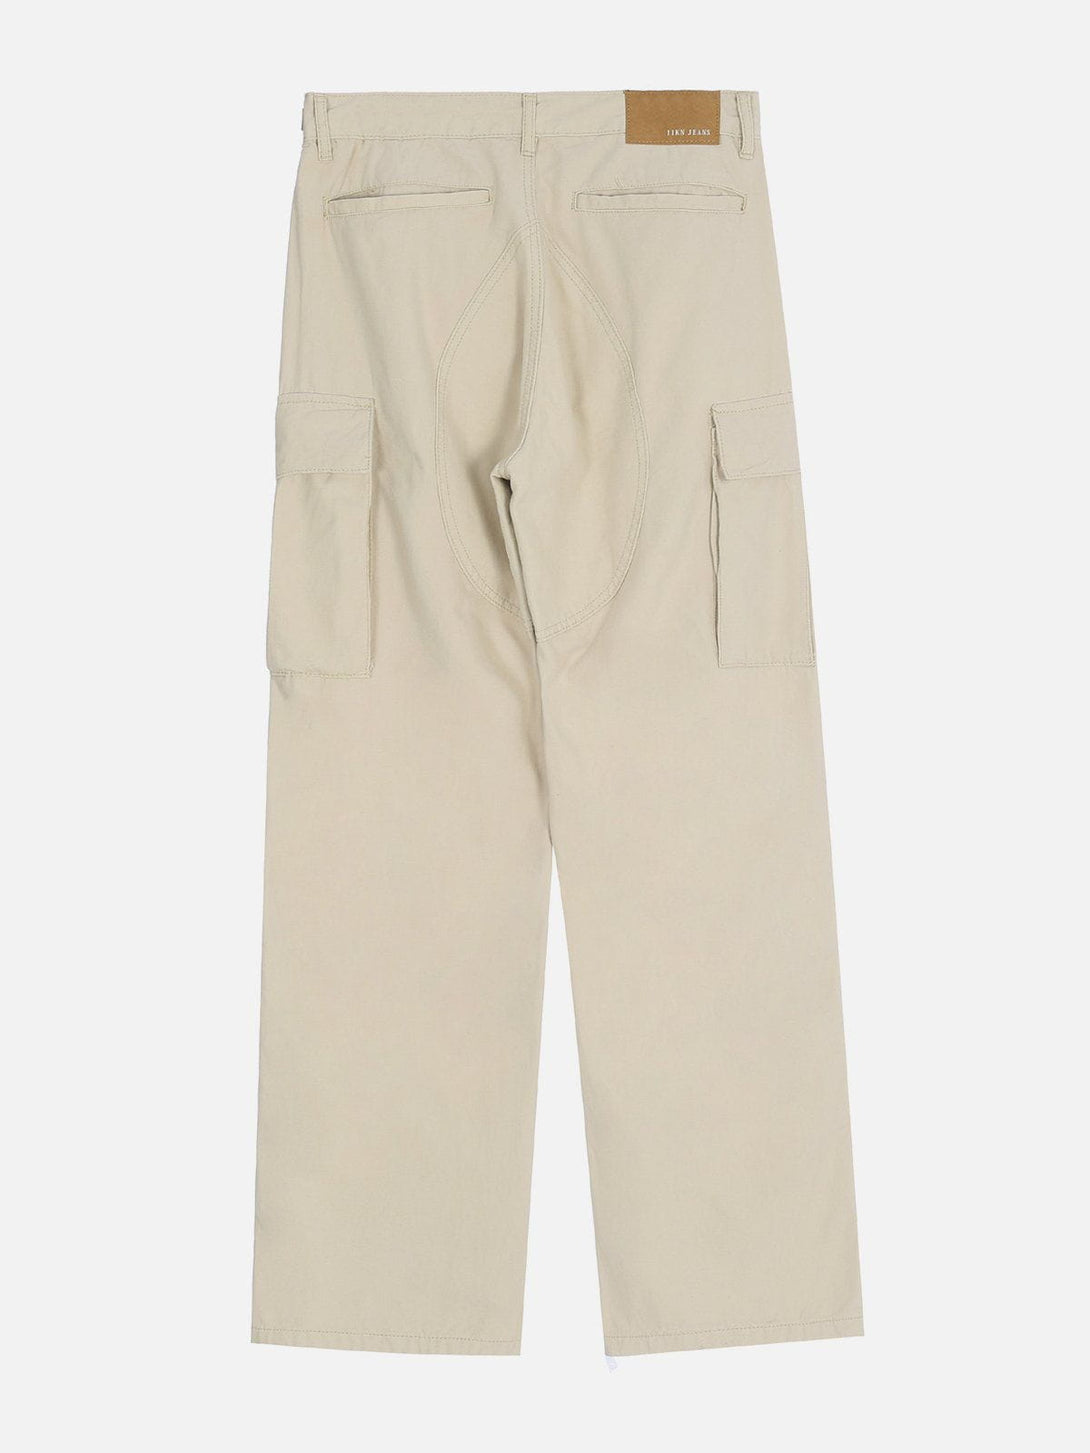 Majesda® - Little Belt Decoration Cargo Pants outfit ideas streetwear fashion